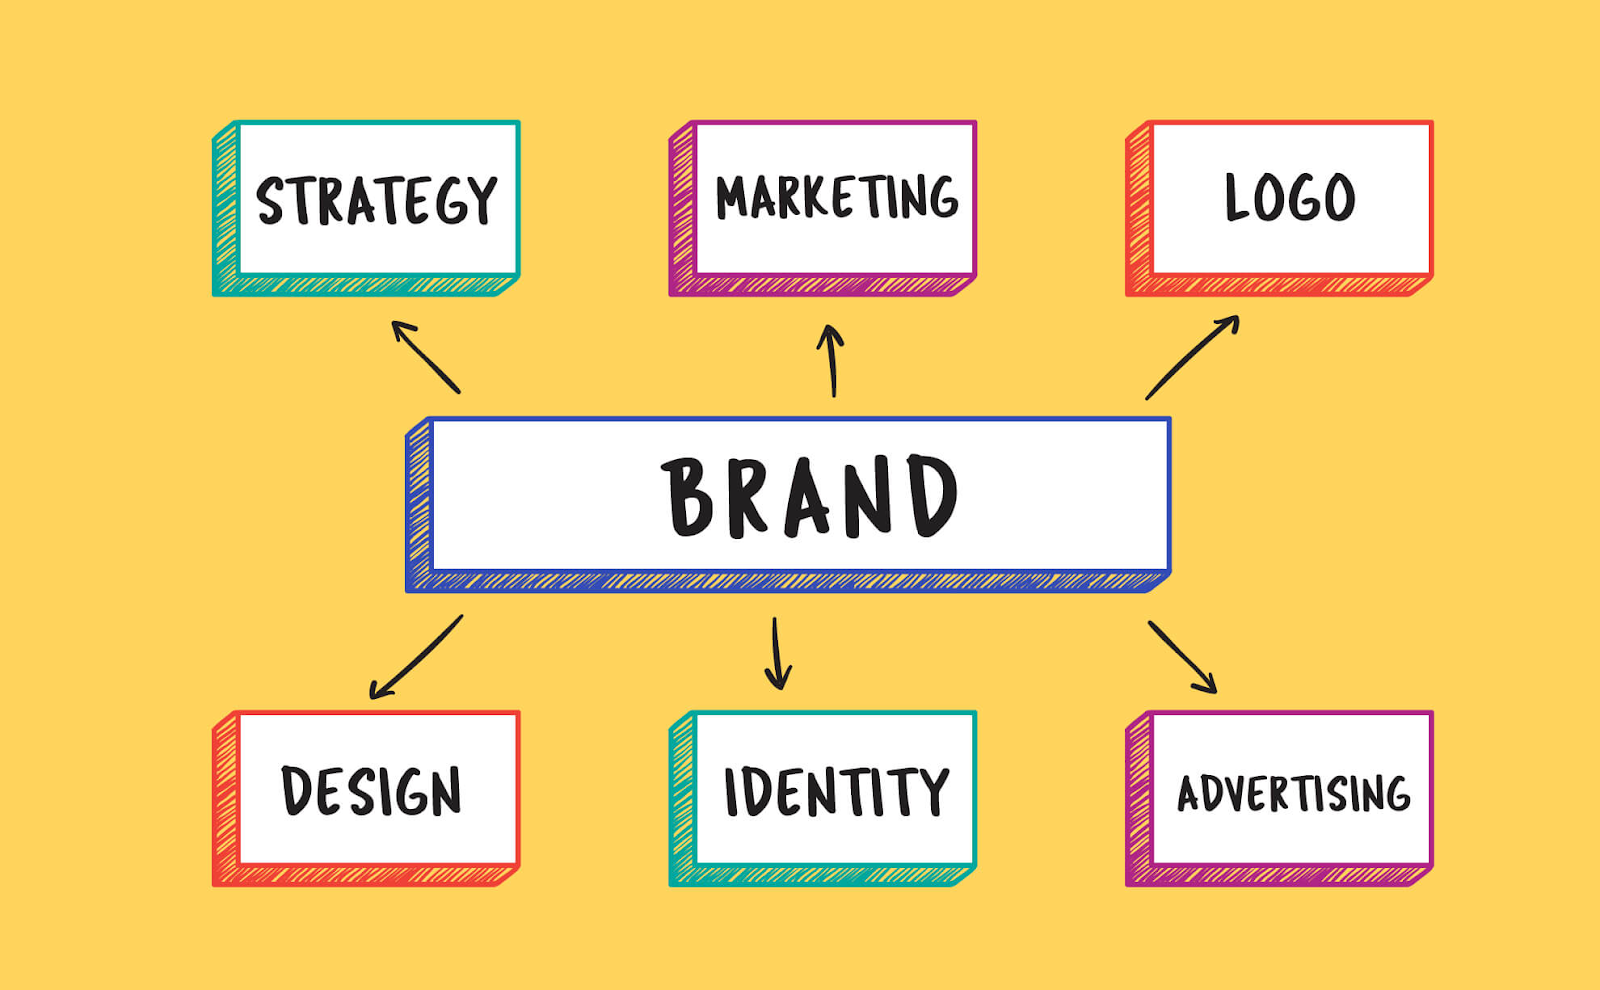 How to Enhance Brand Image
